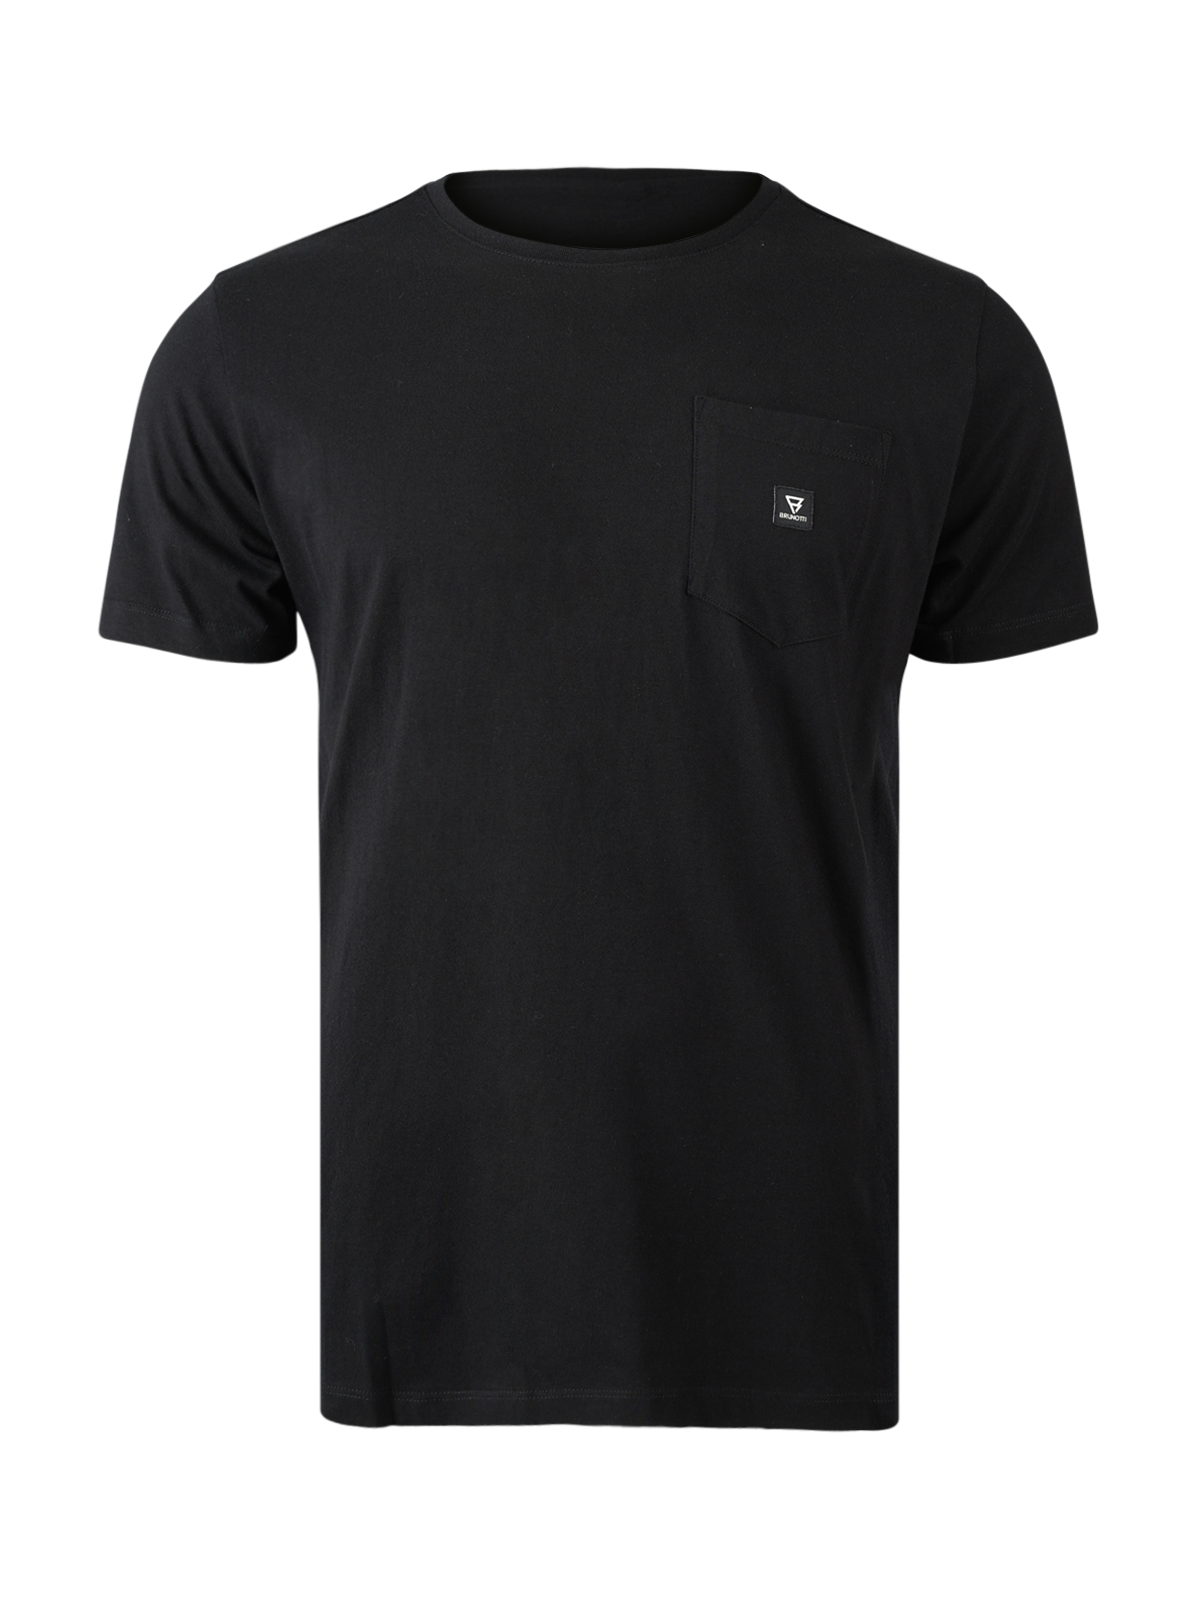 Axle-N Herren T-Shirt | Schwarz
